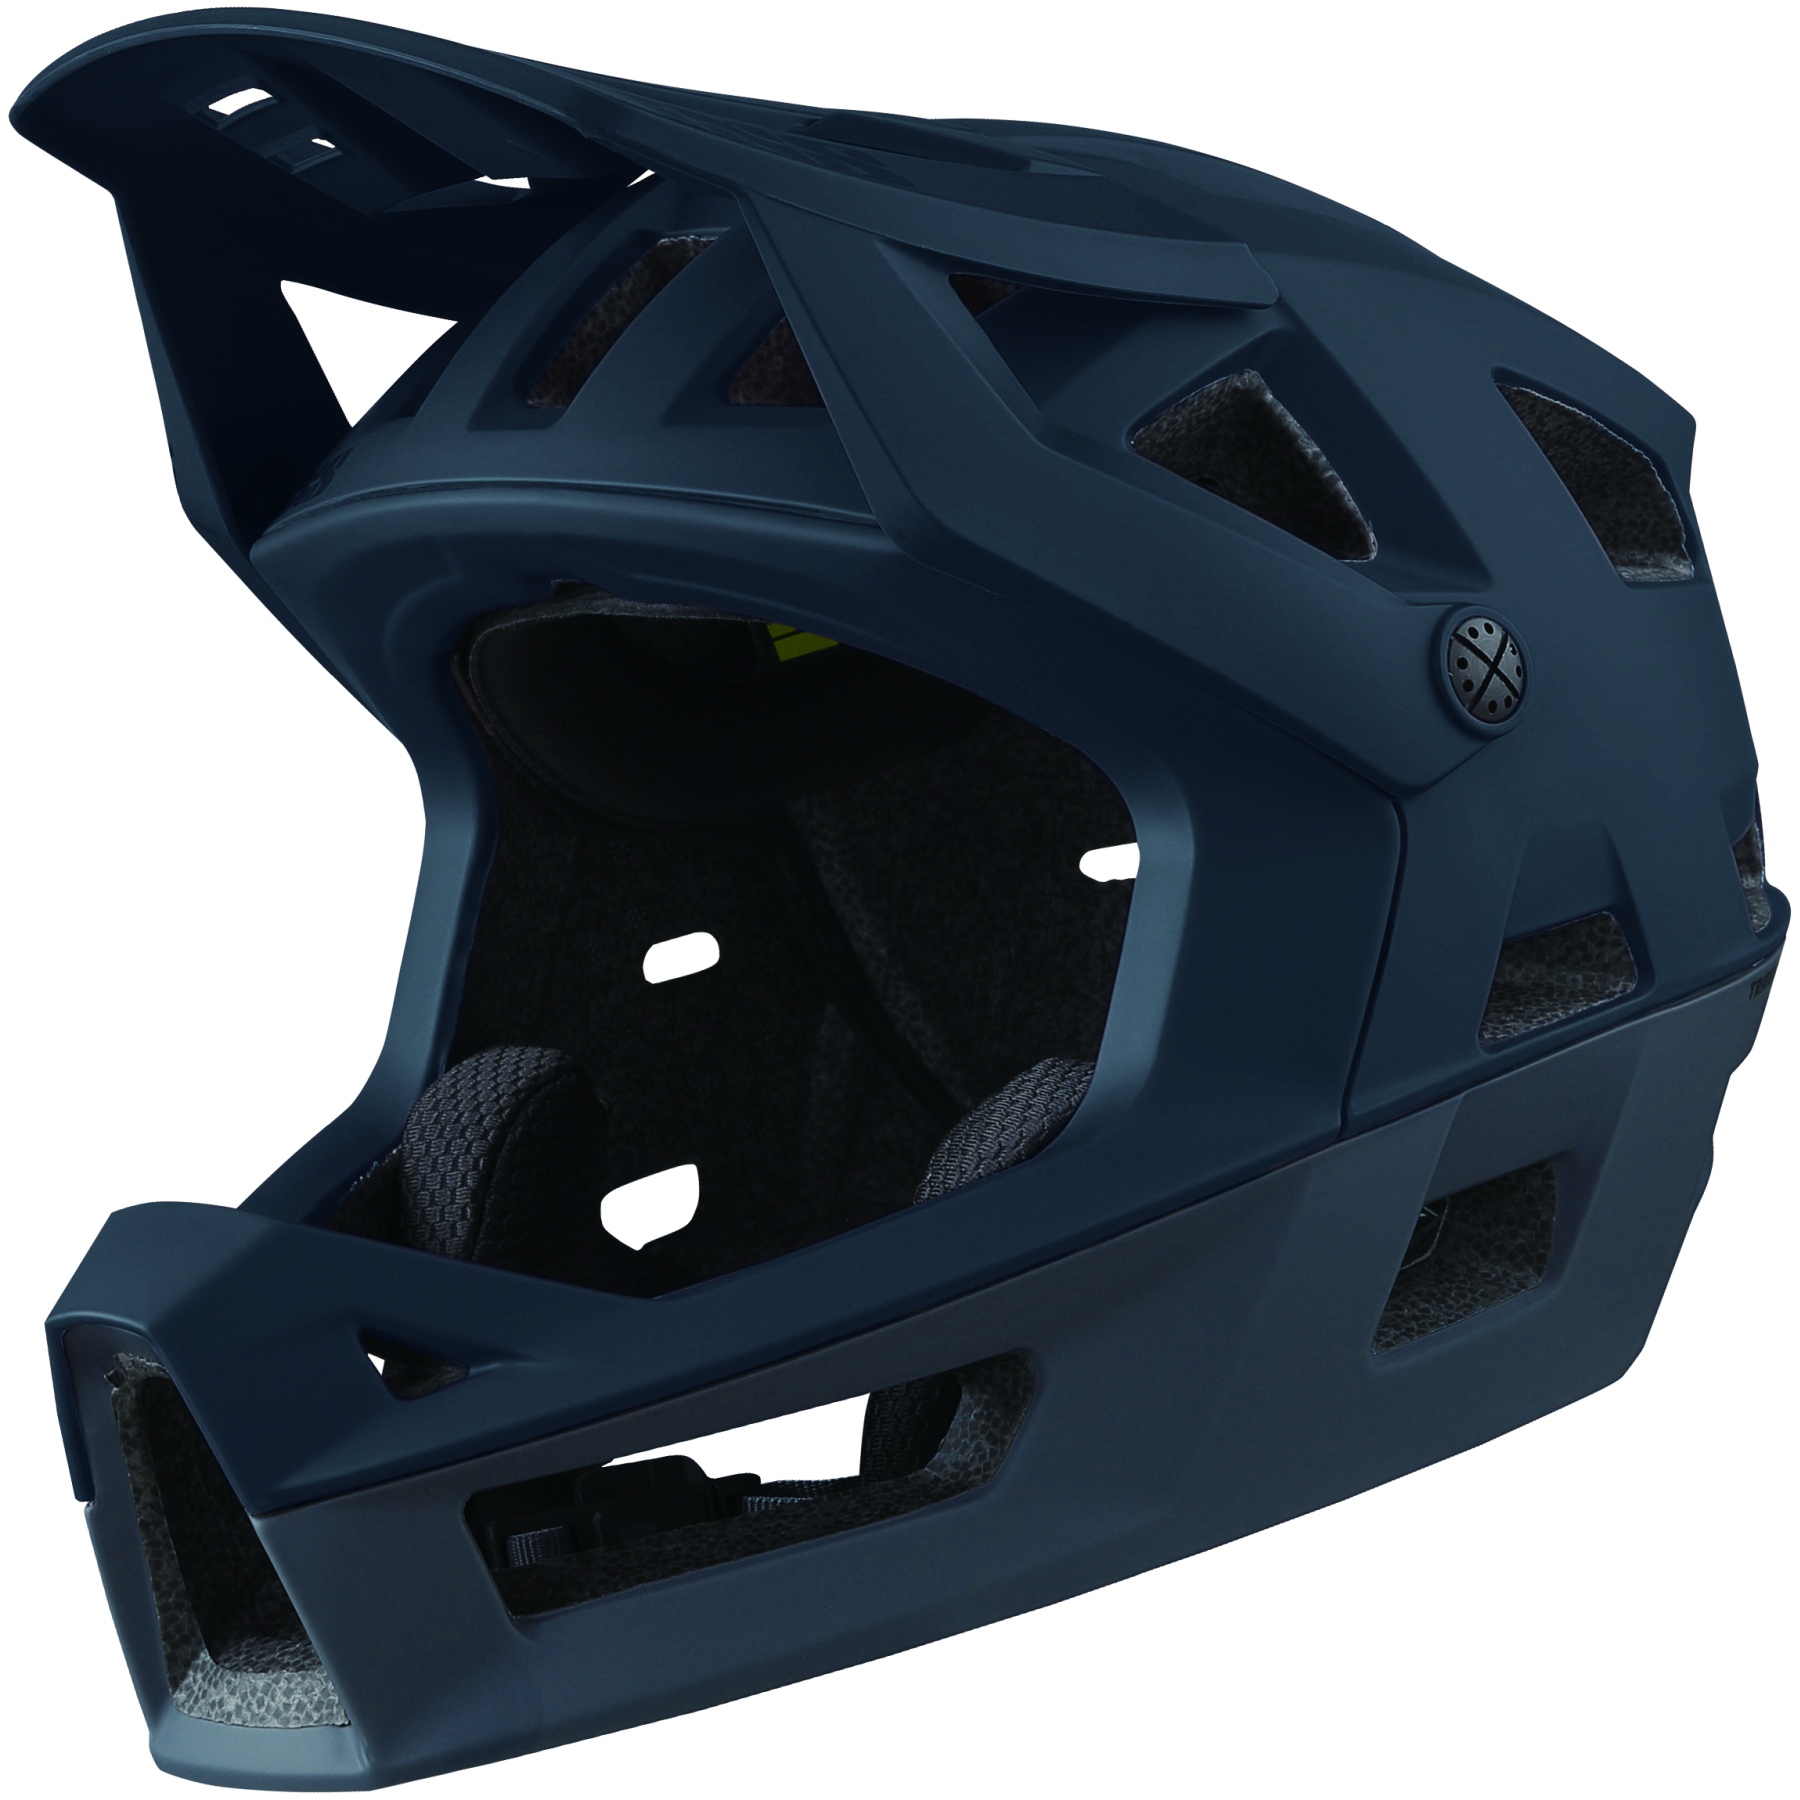 Productfoto van iXS Trigger Fullface Helm - marine